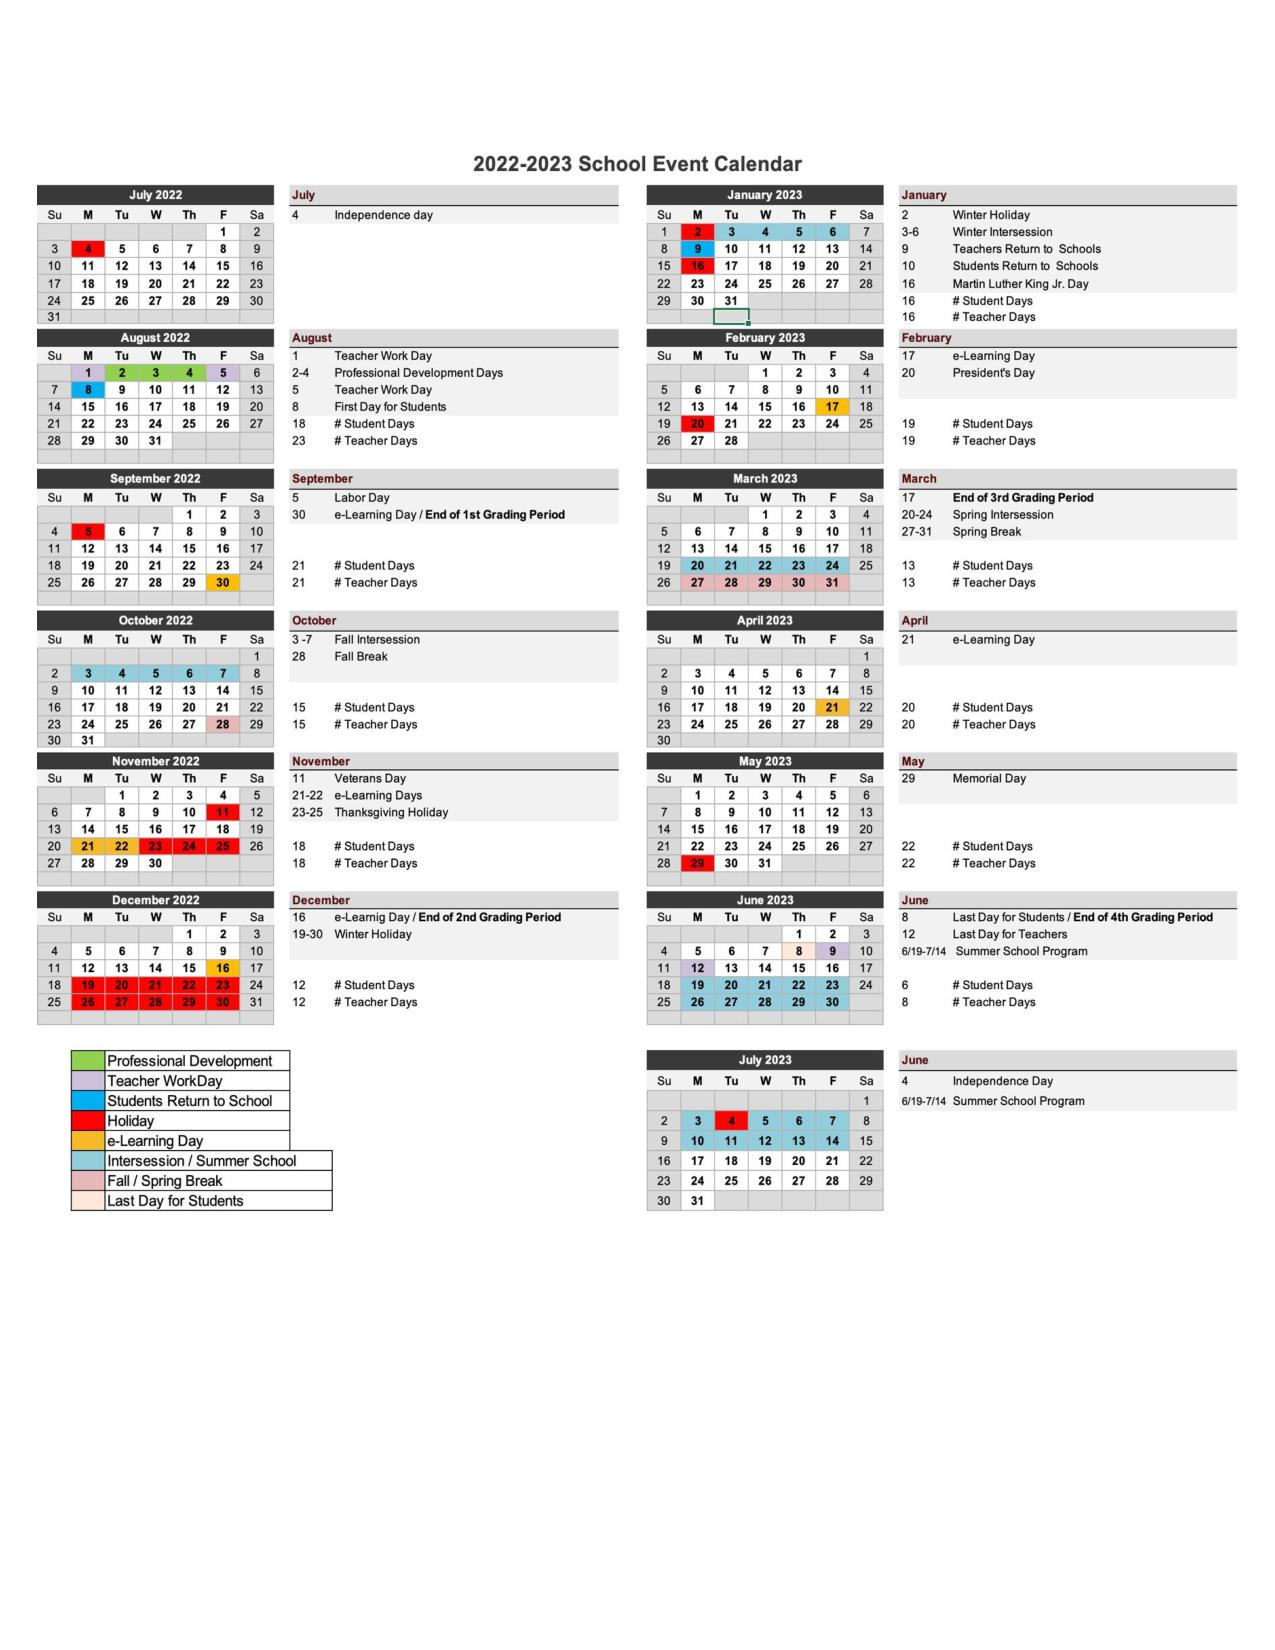 Birmingham City Schools Calendar 2022-2023 in PDF